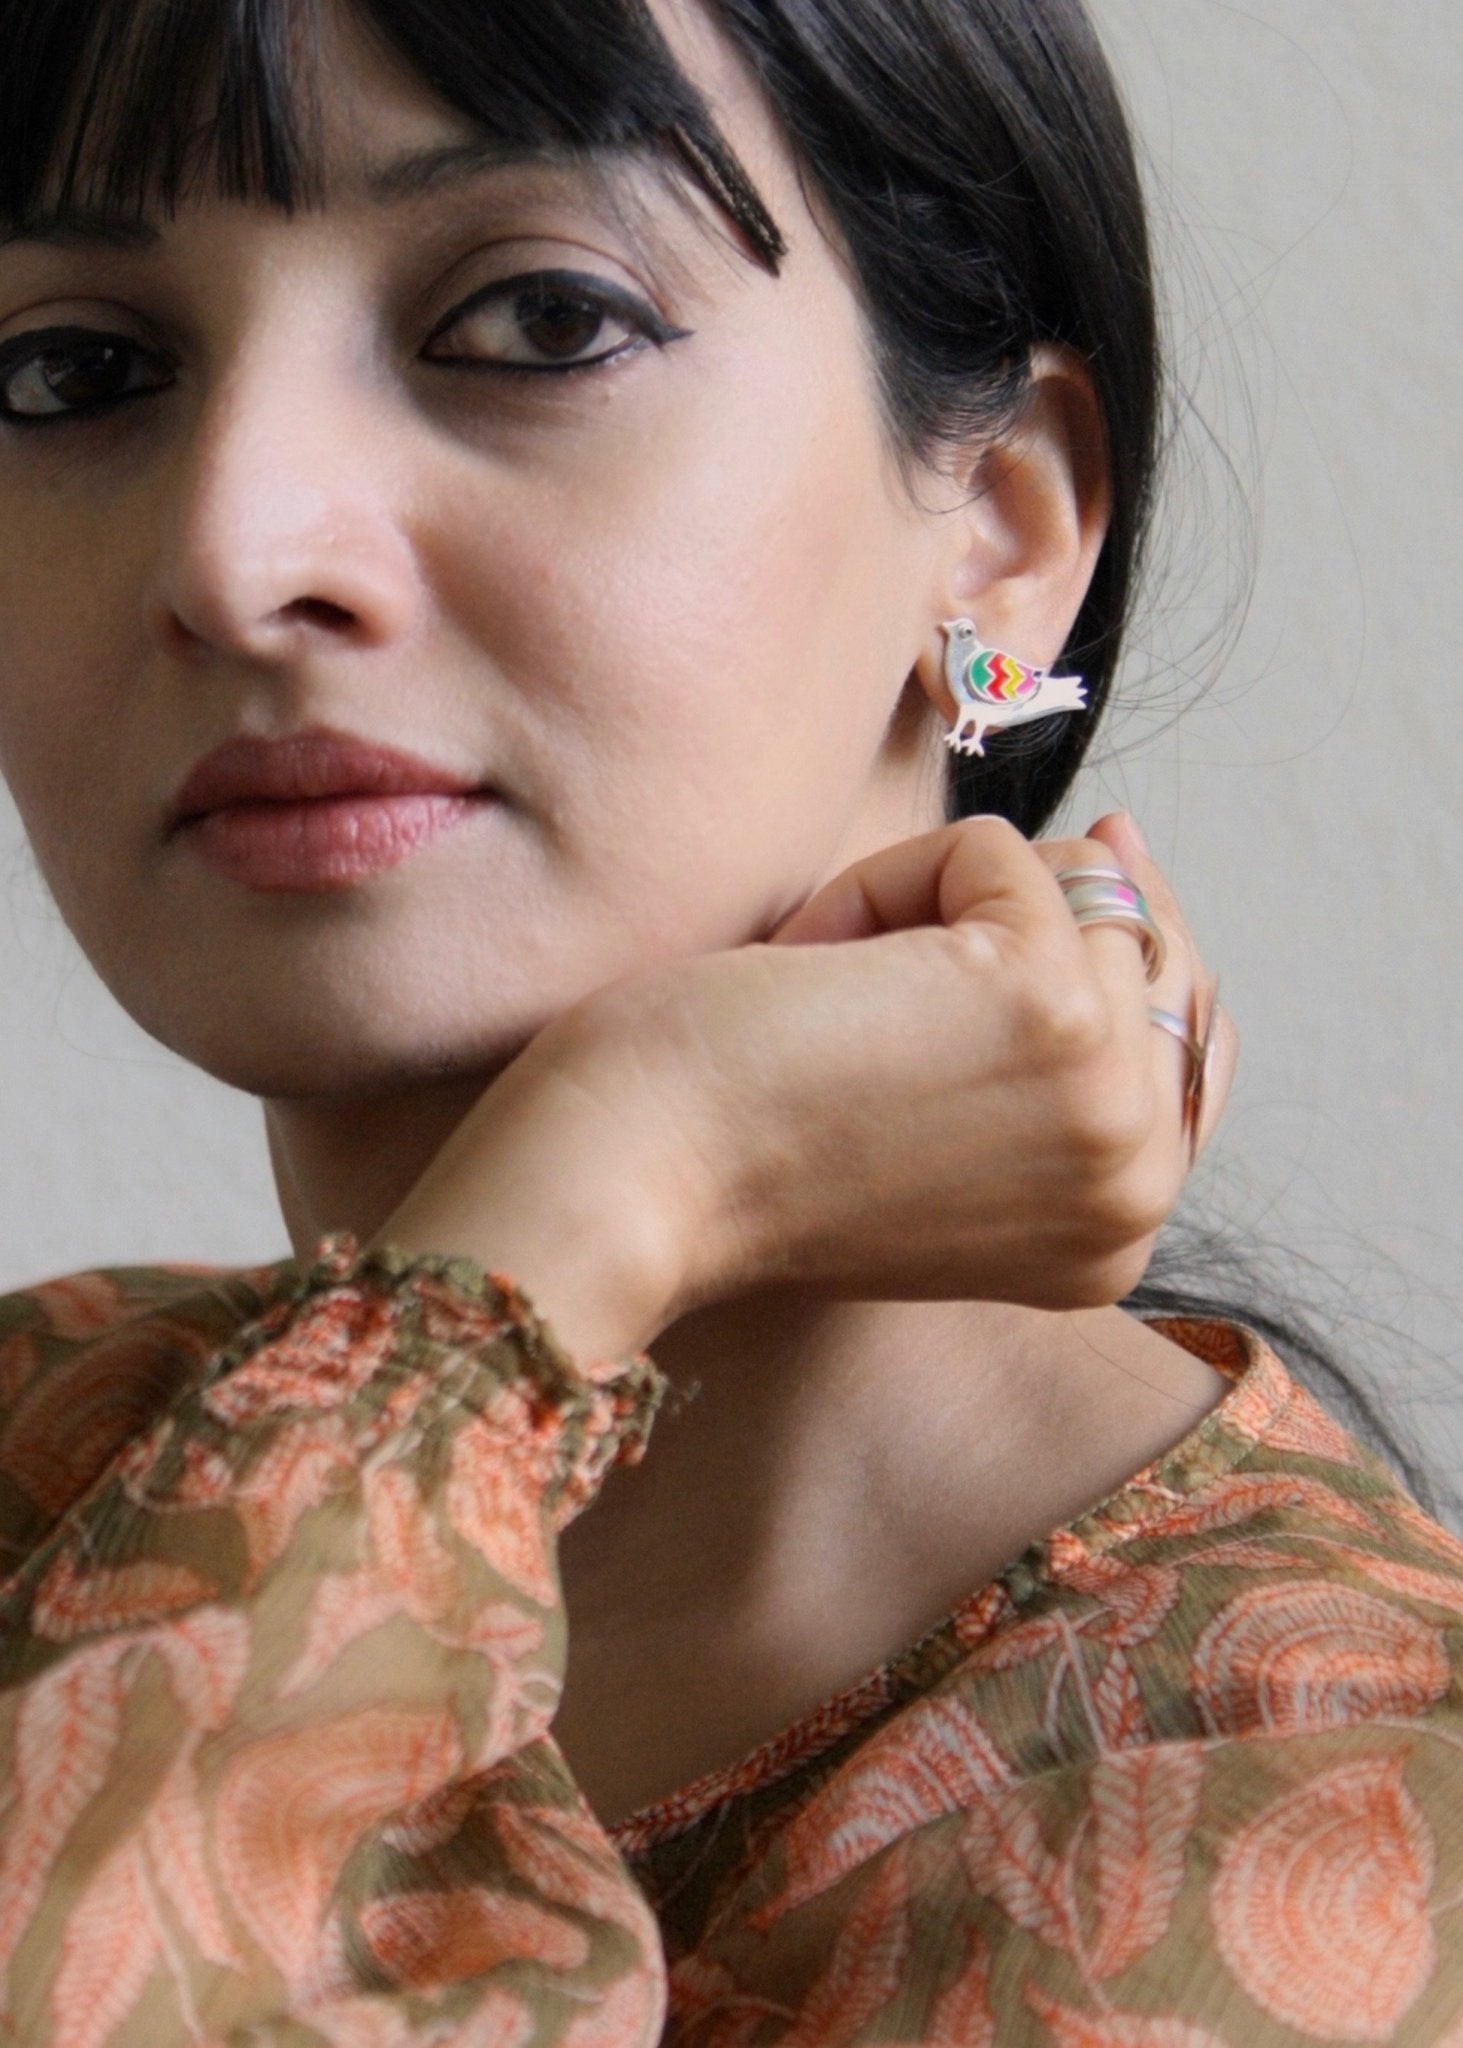 Whimsical, asymmetrical 'paksi' (bird) earrings - Lai